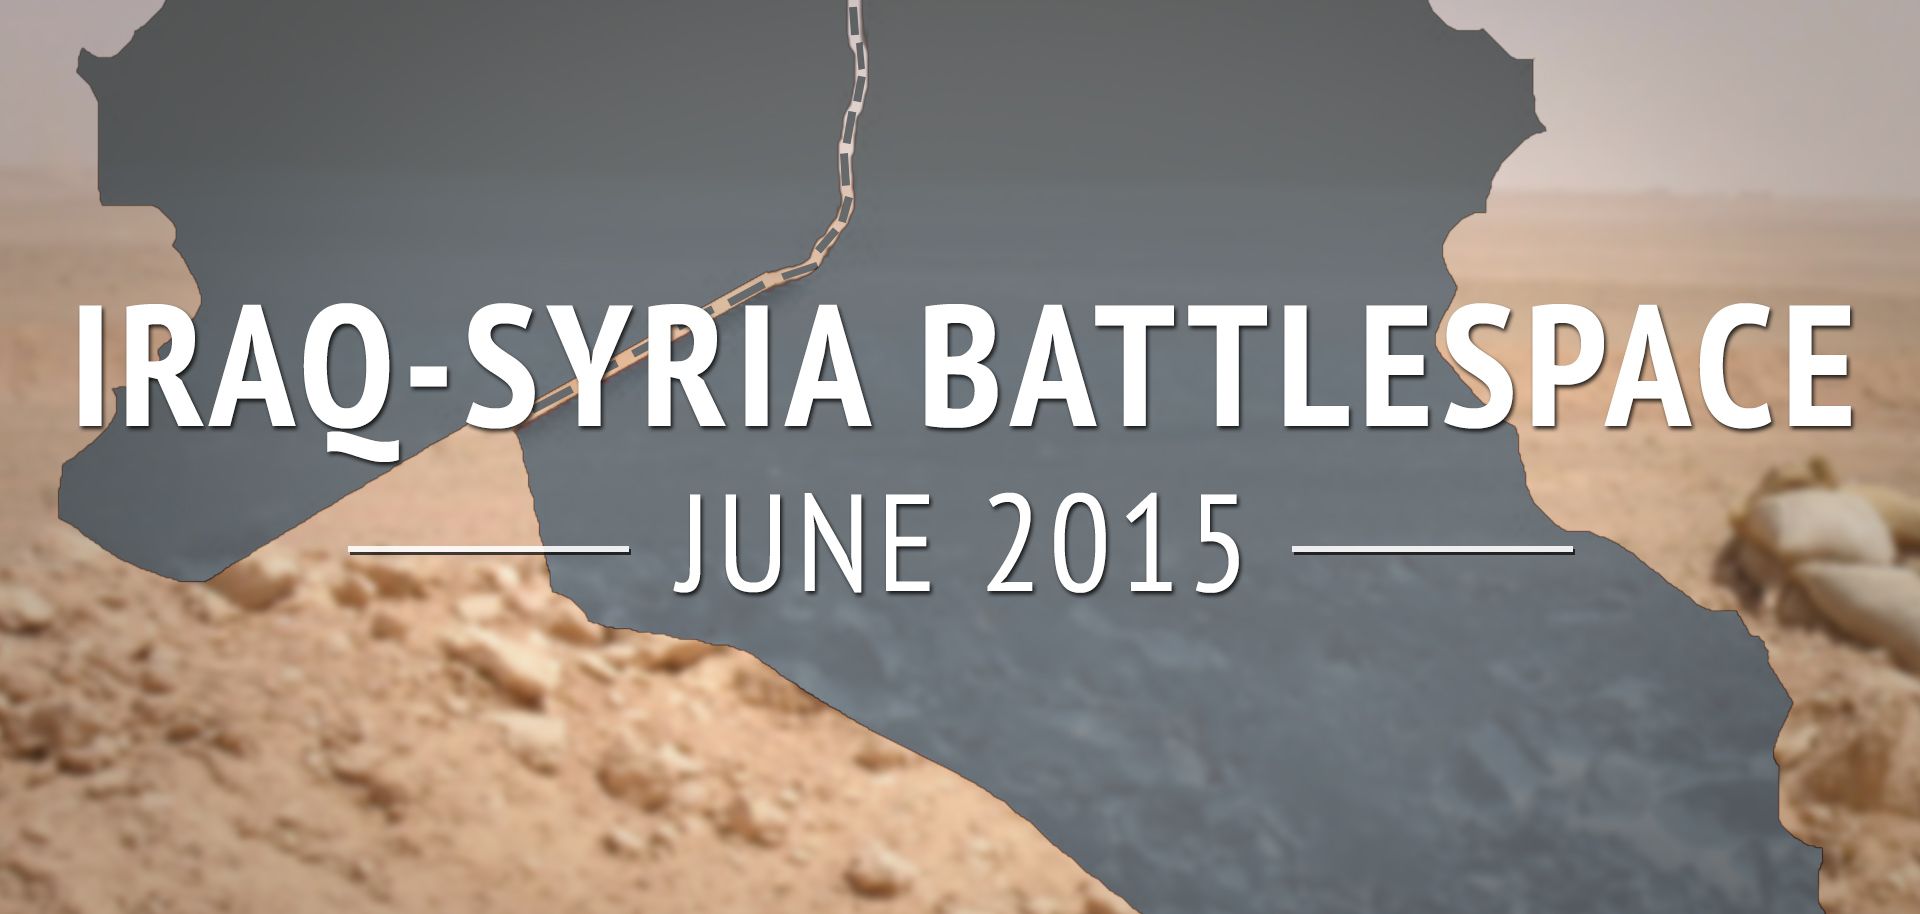 Iraq-Syria Battlespace: June 2015 (DISPLAY)